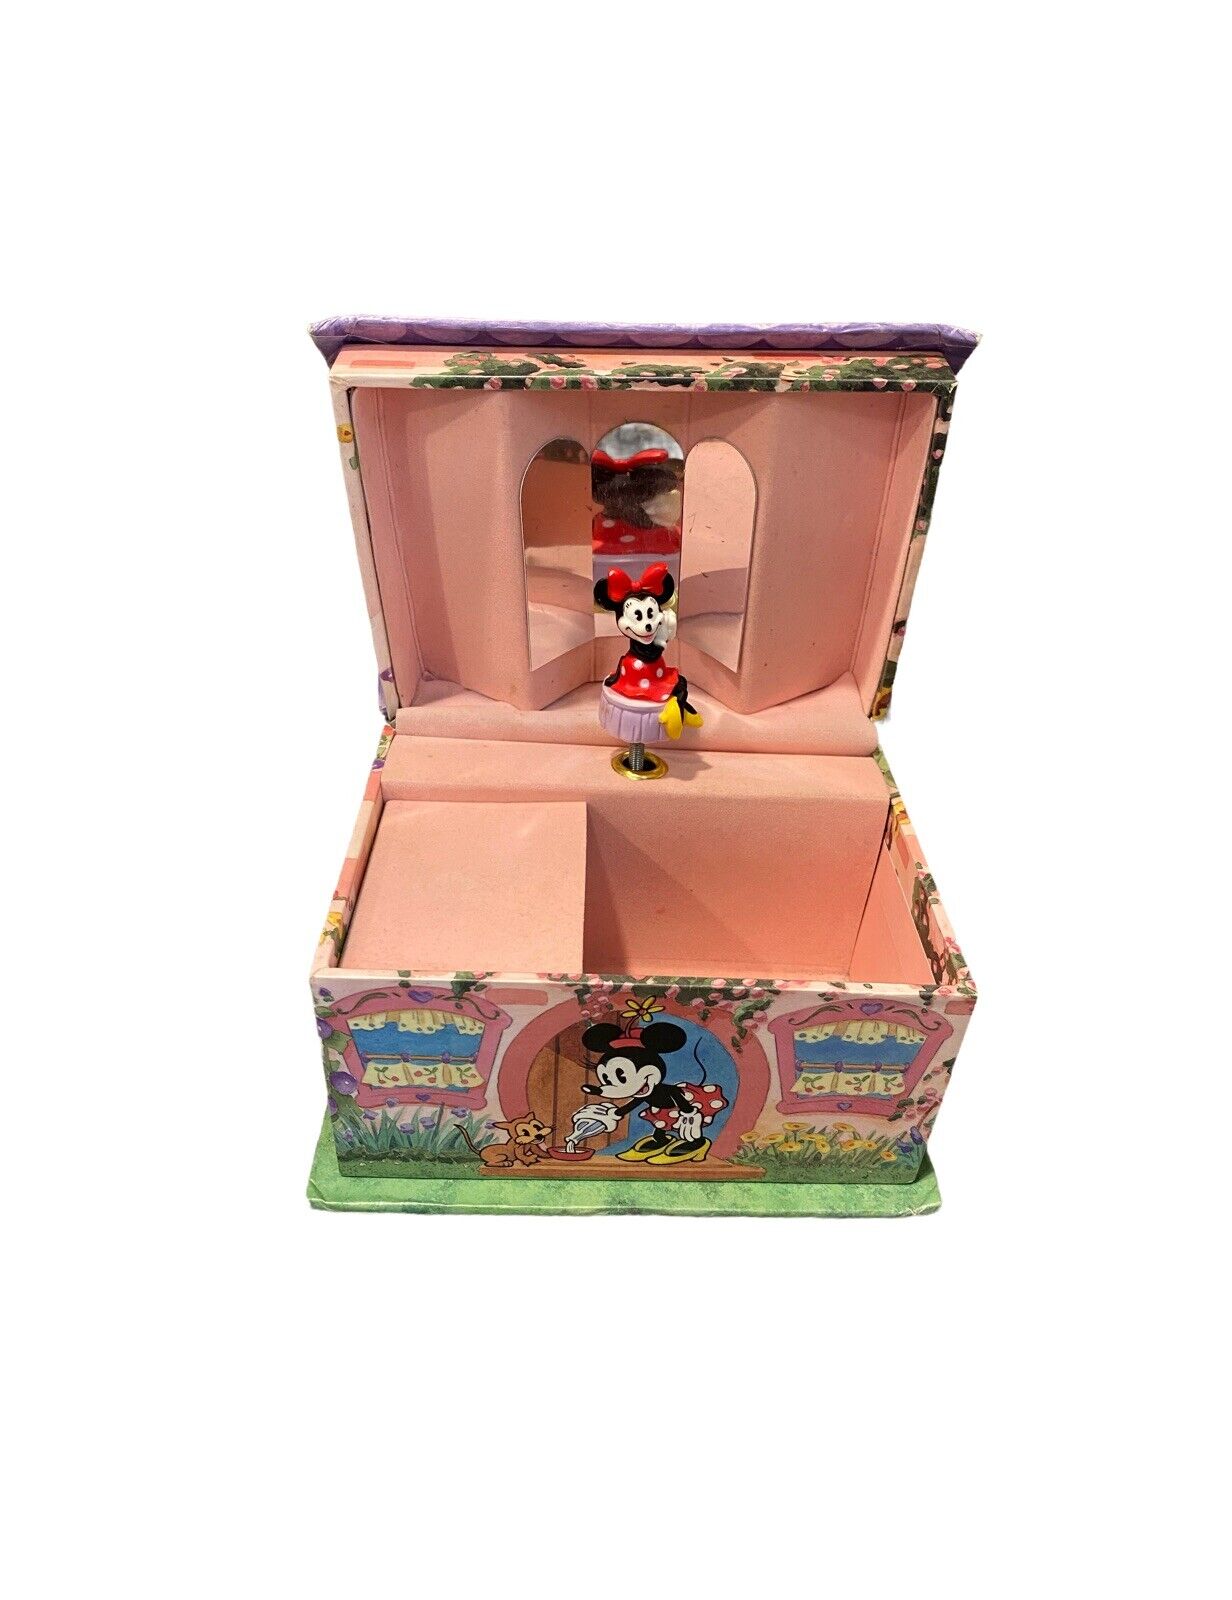 Vintage Disney MINNIE\'S YOO HOO Musical Wind Up Jewelry Box House Disneyland